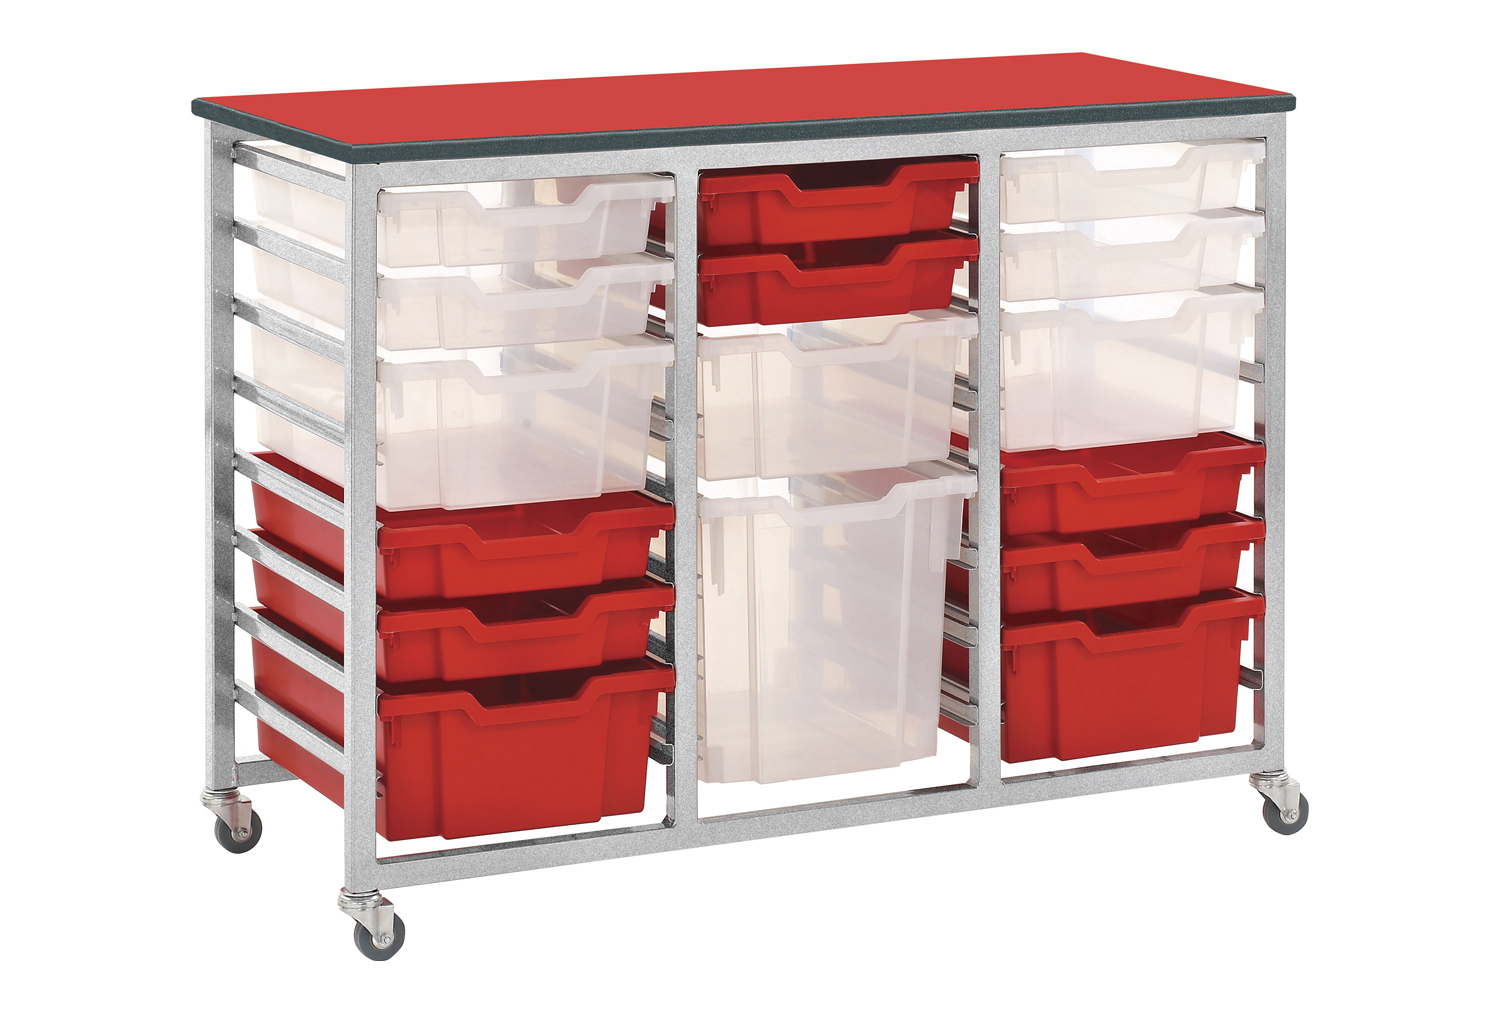 Metalliform Triple Column Metal Classroom Tray Storage Unit Only (Holds 24 Standard Classroom Trays)